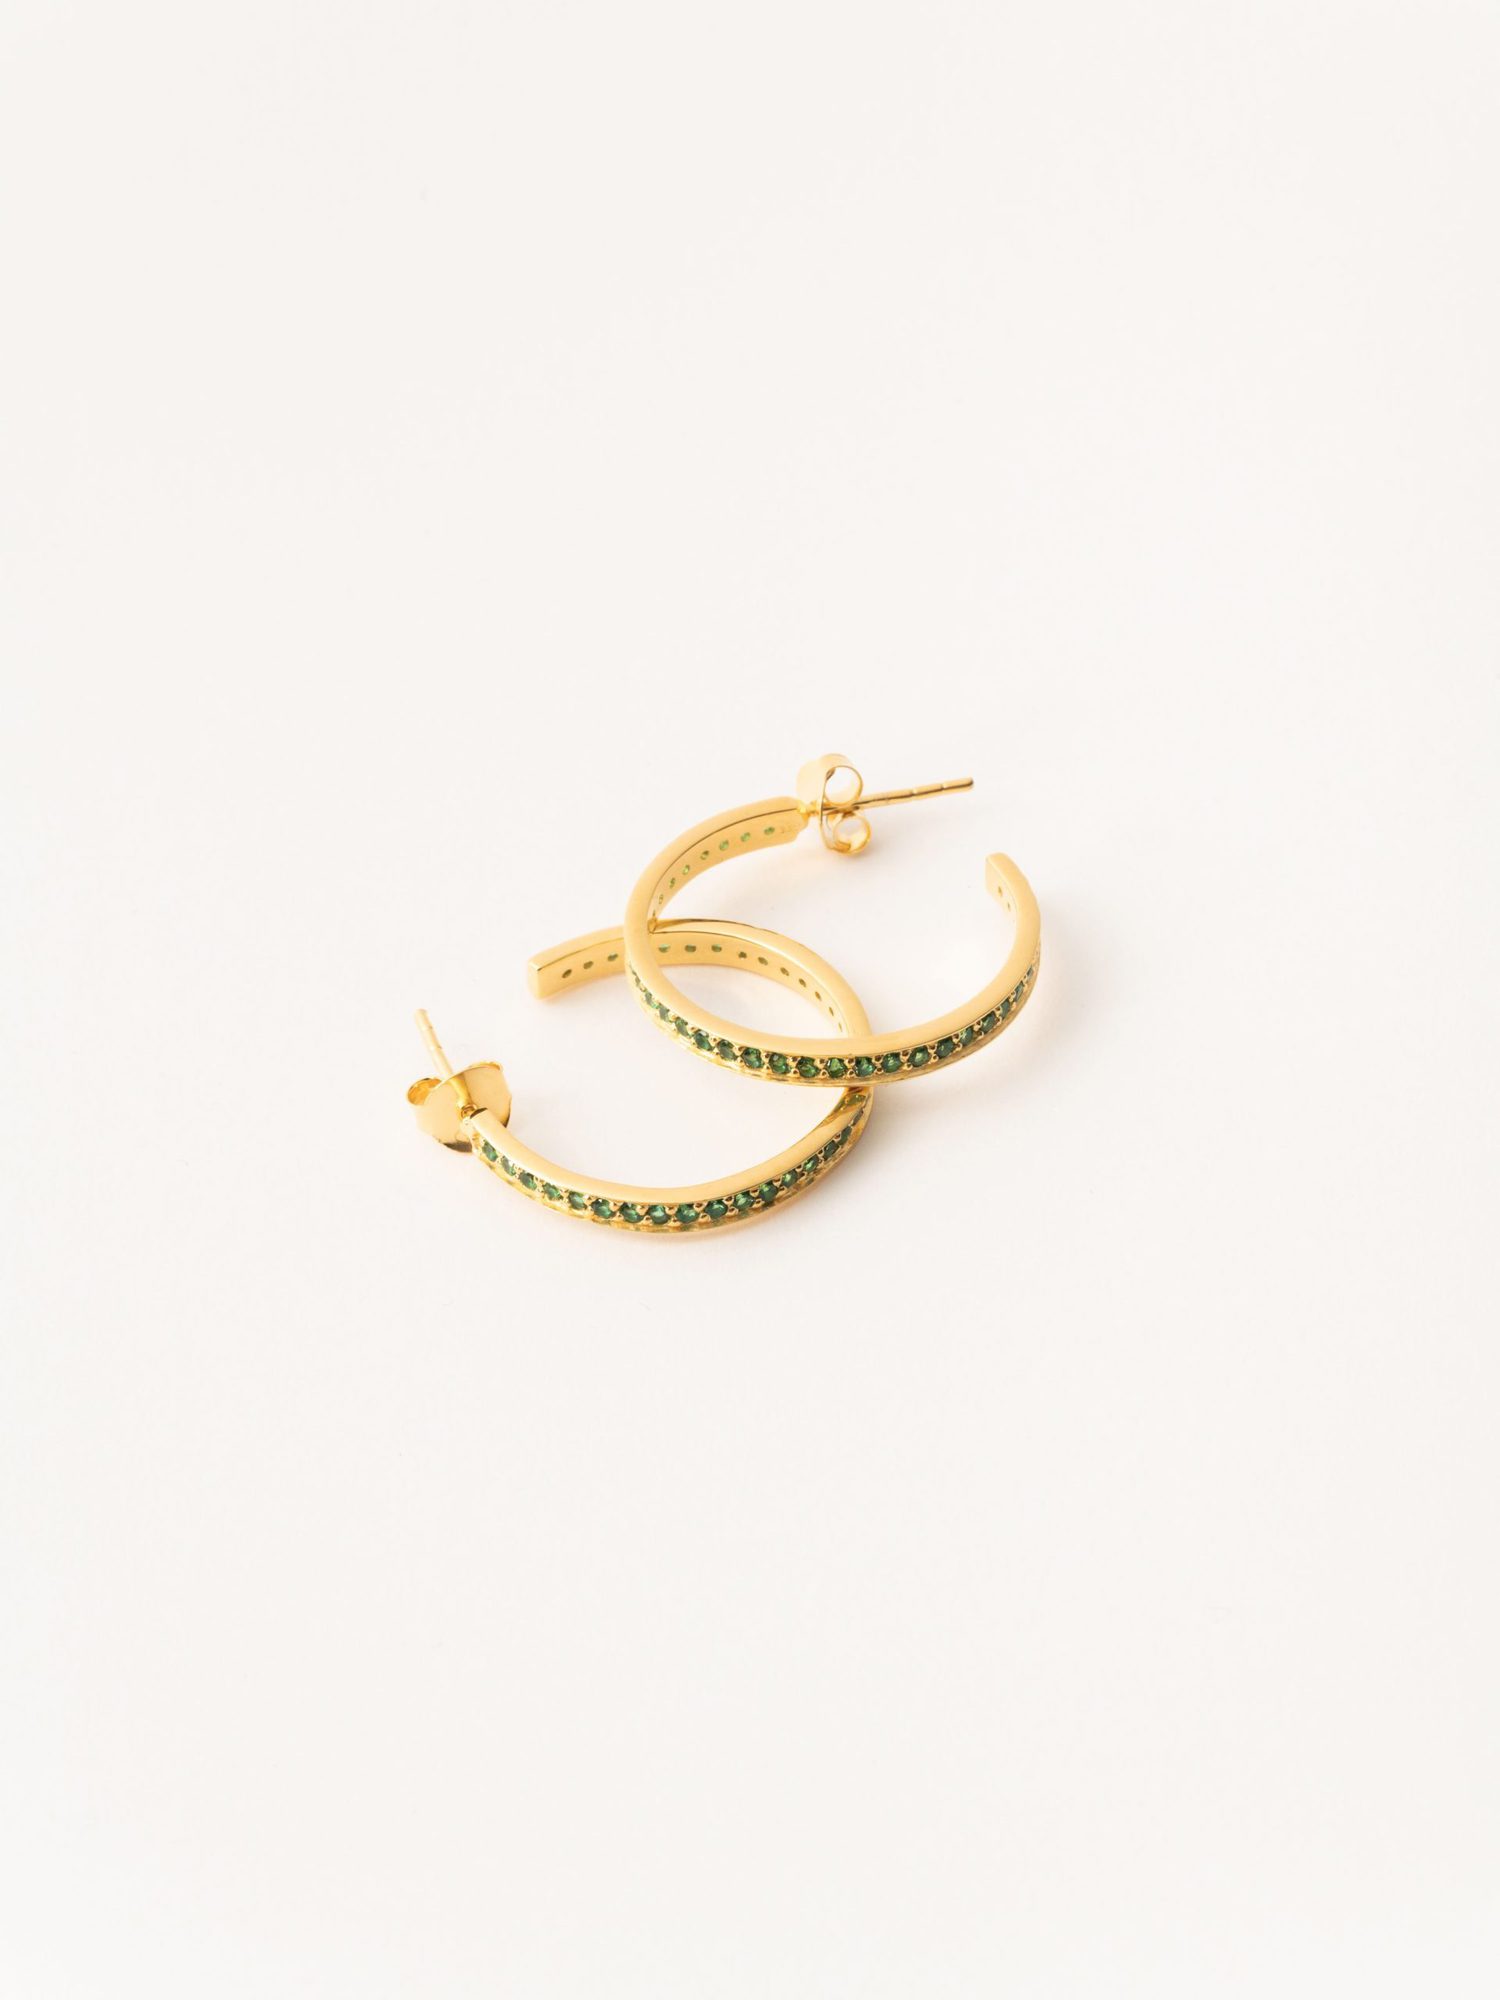 Gold and Emerald Zircon Hoop Earrings